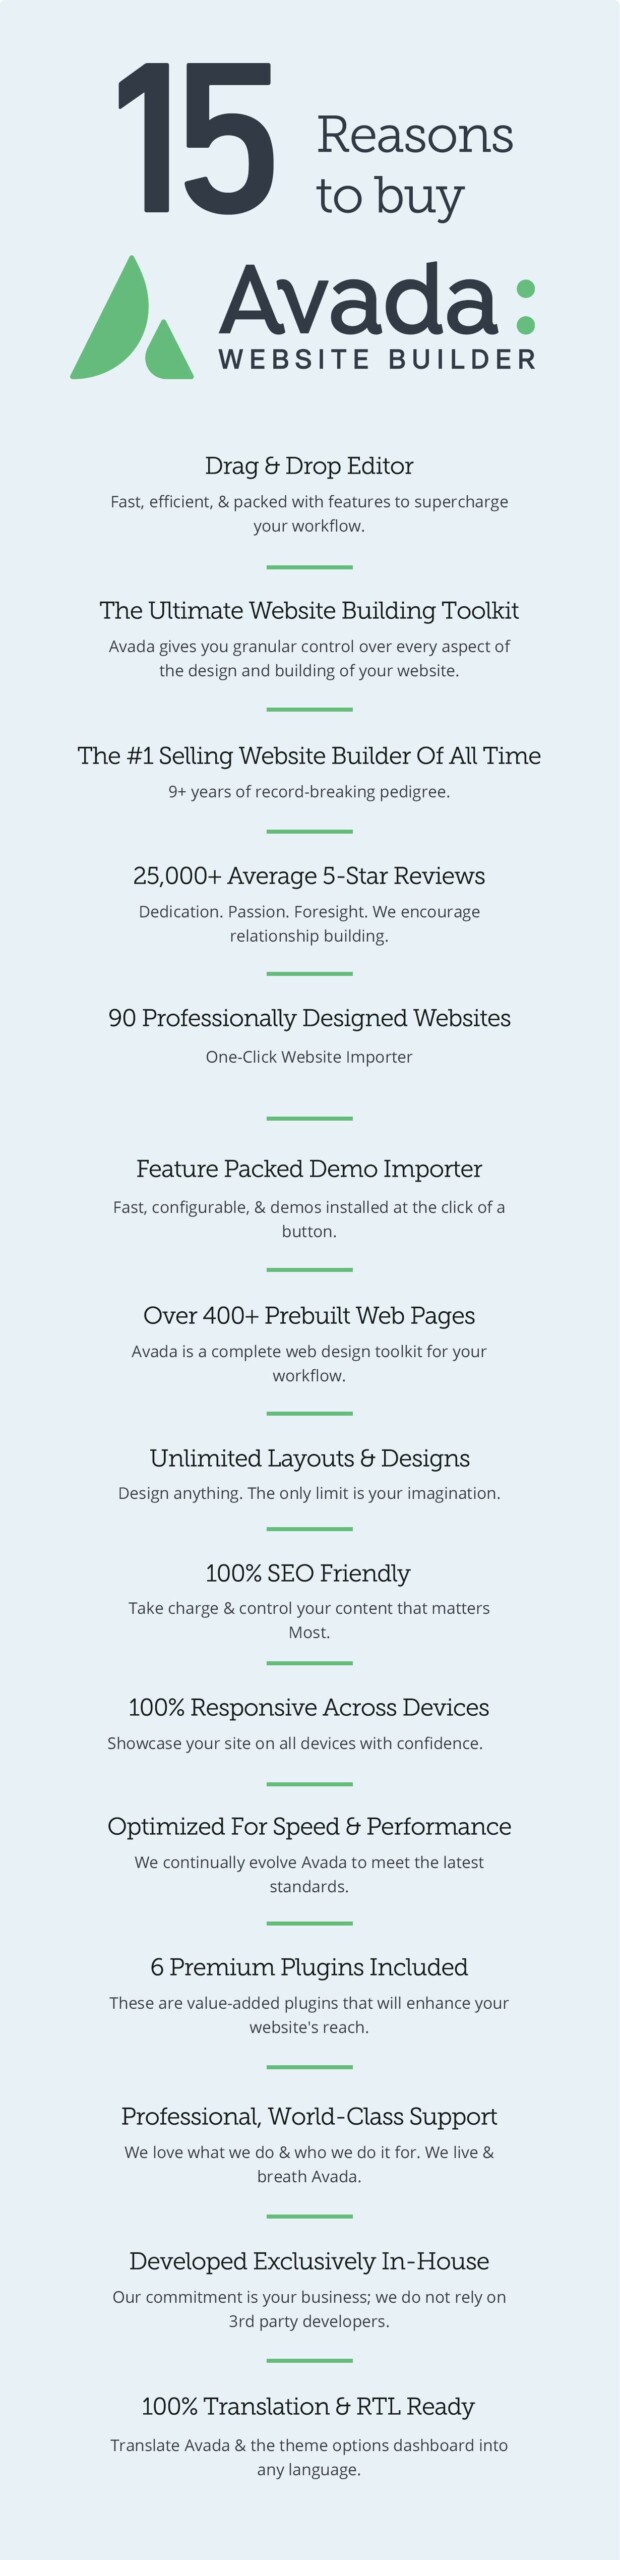 Avada | Website Builder For WordPress & WooCommerce - 35